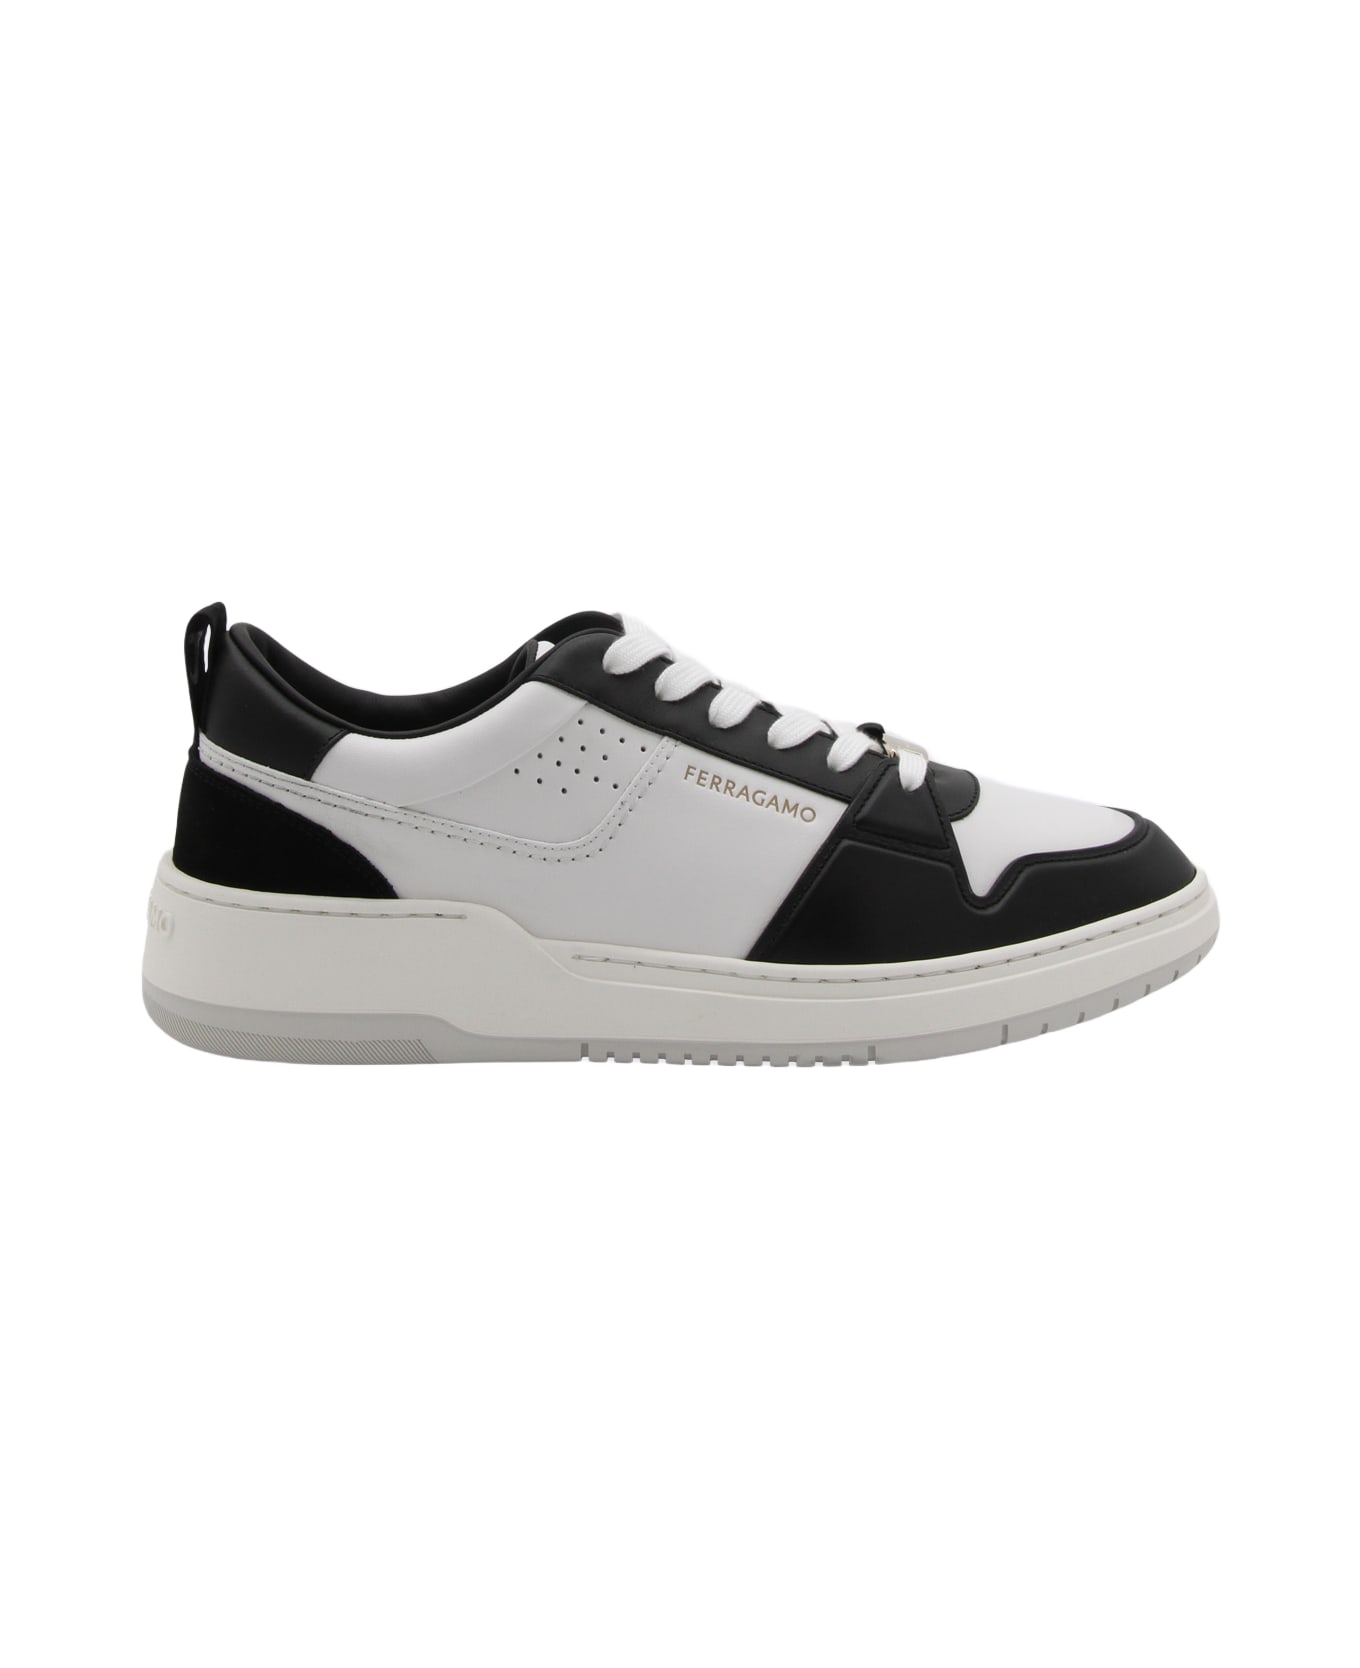 Ferragamo White And Black Leather Street Style Pain Logo Sneakers - White スニーカー